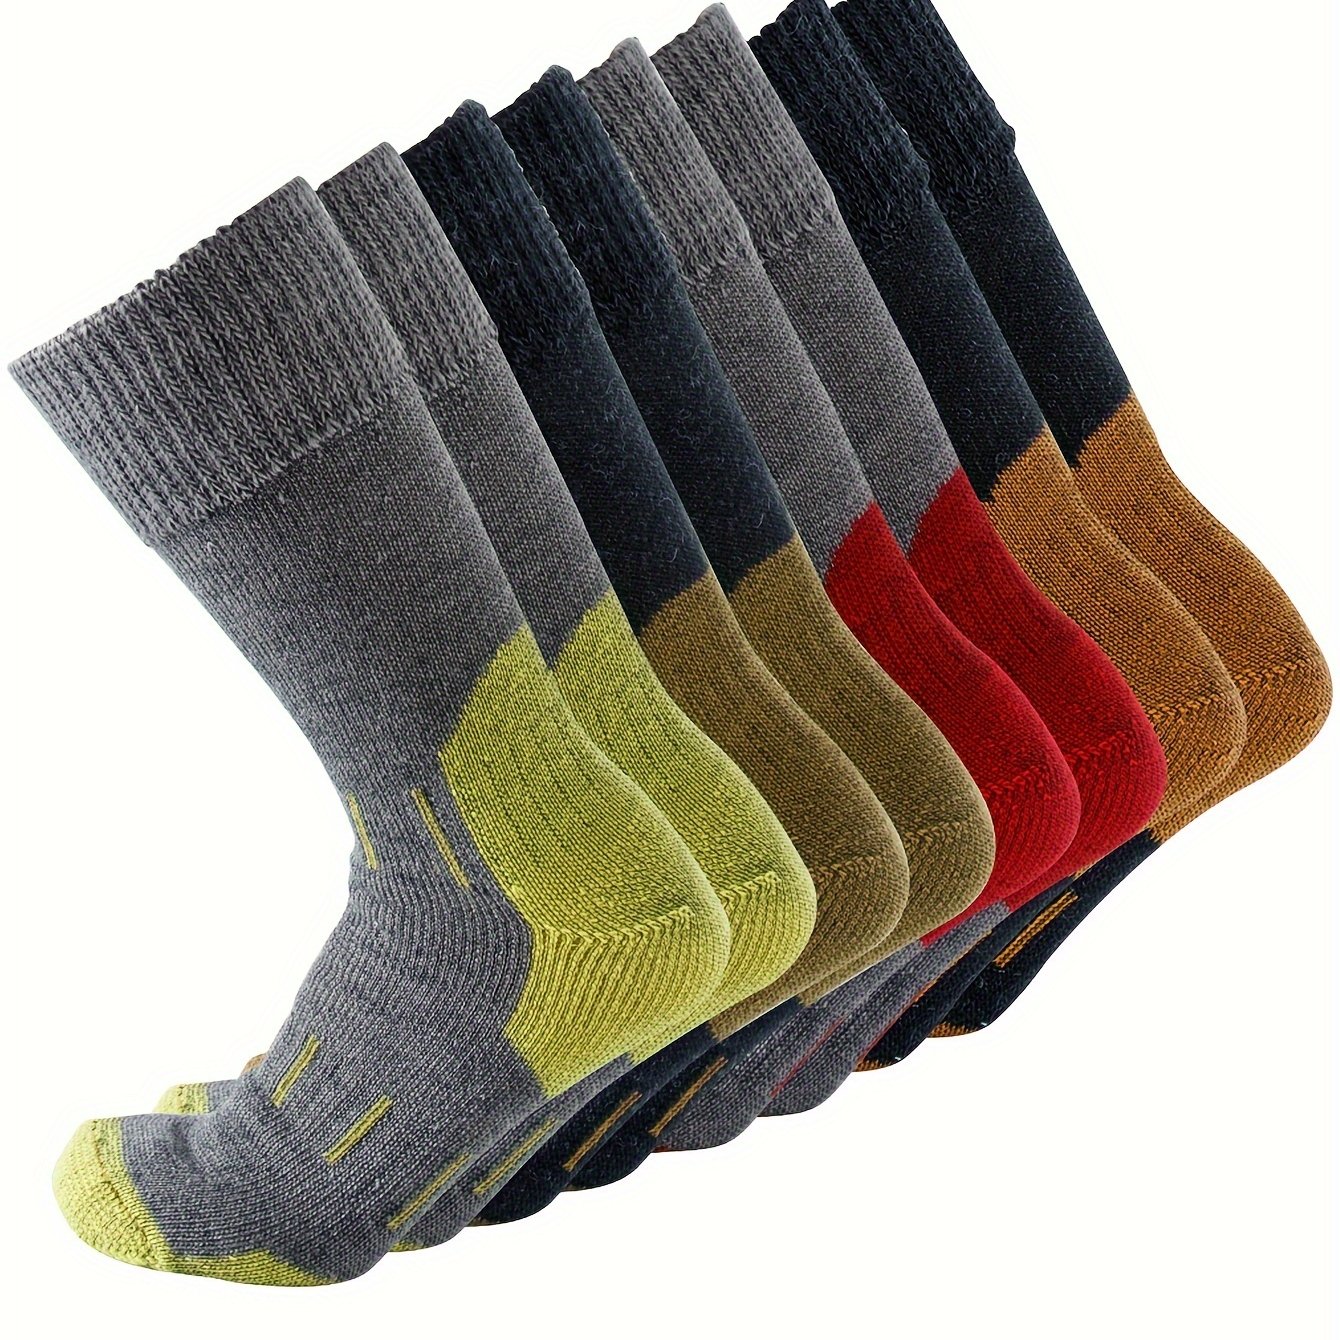 4pairs 79% Merino Wool Warm Socks For Men, Athletic Crew Socks For Hiking, Running, Climbing, Suitable For US Men 10-13